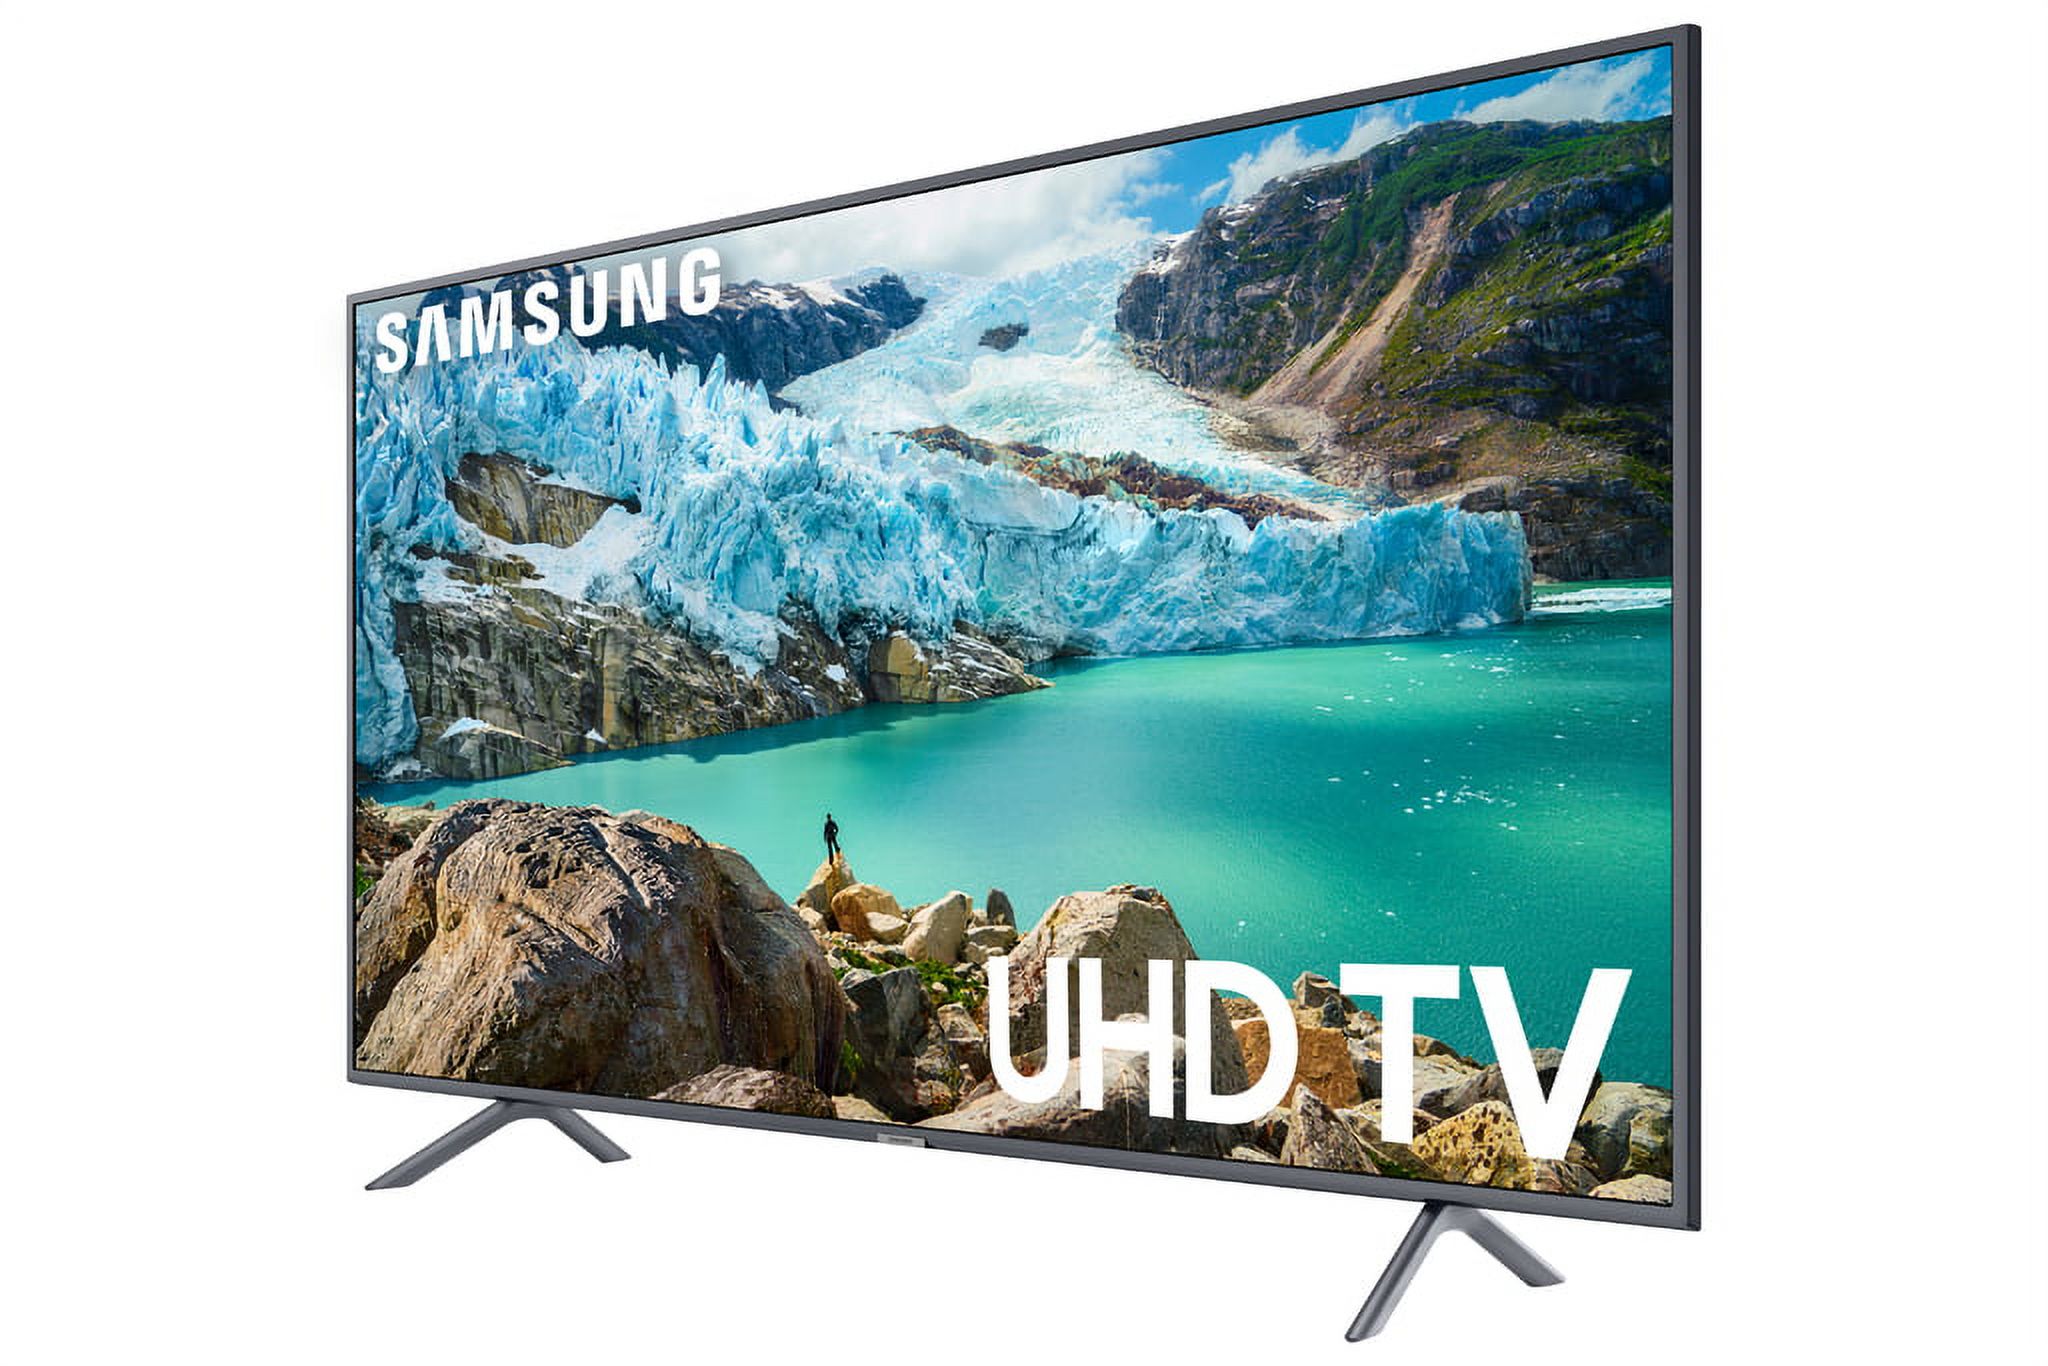 SAMSUNG 75" Class 4K Ultra HD (2160P) HDR Smart LED TV UN75RU7200 (2019 Model) - image 3 of 9